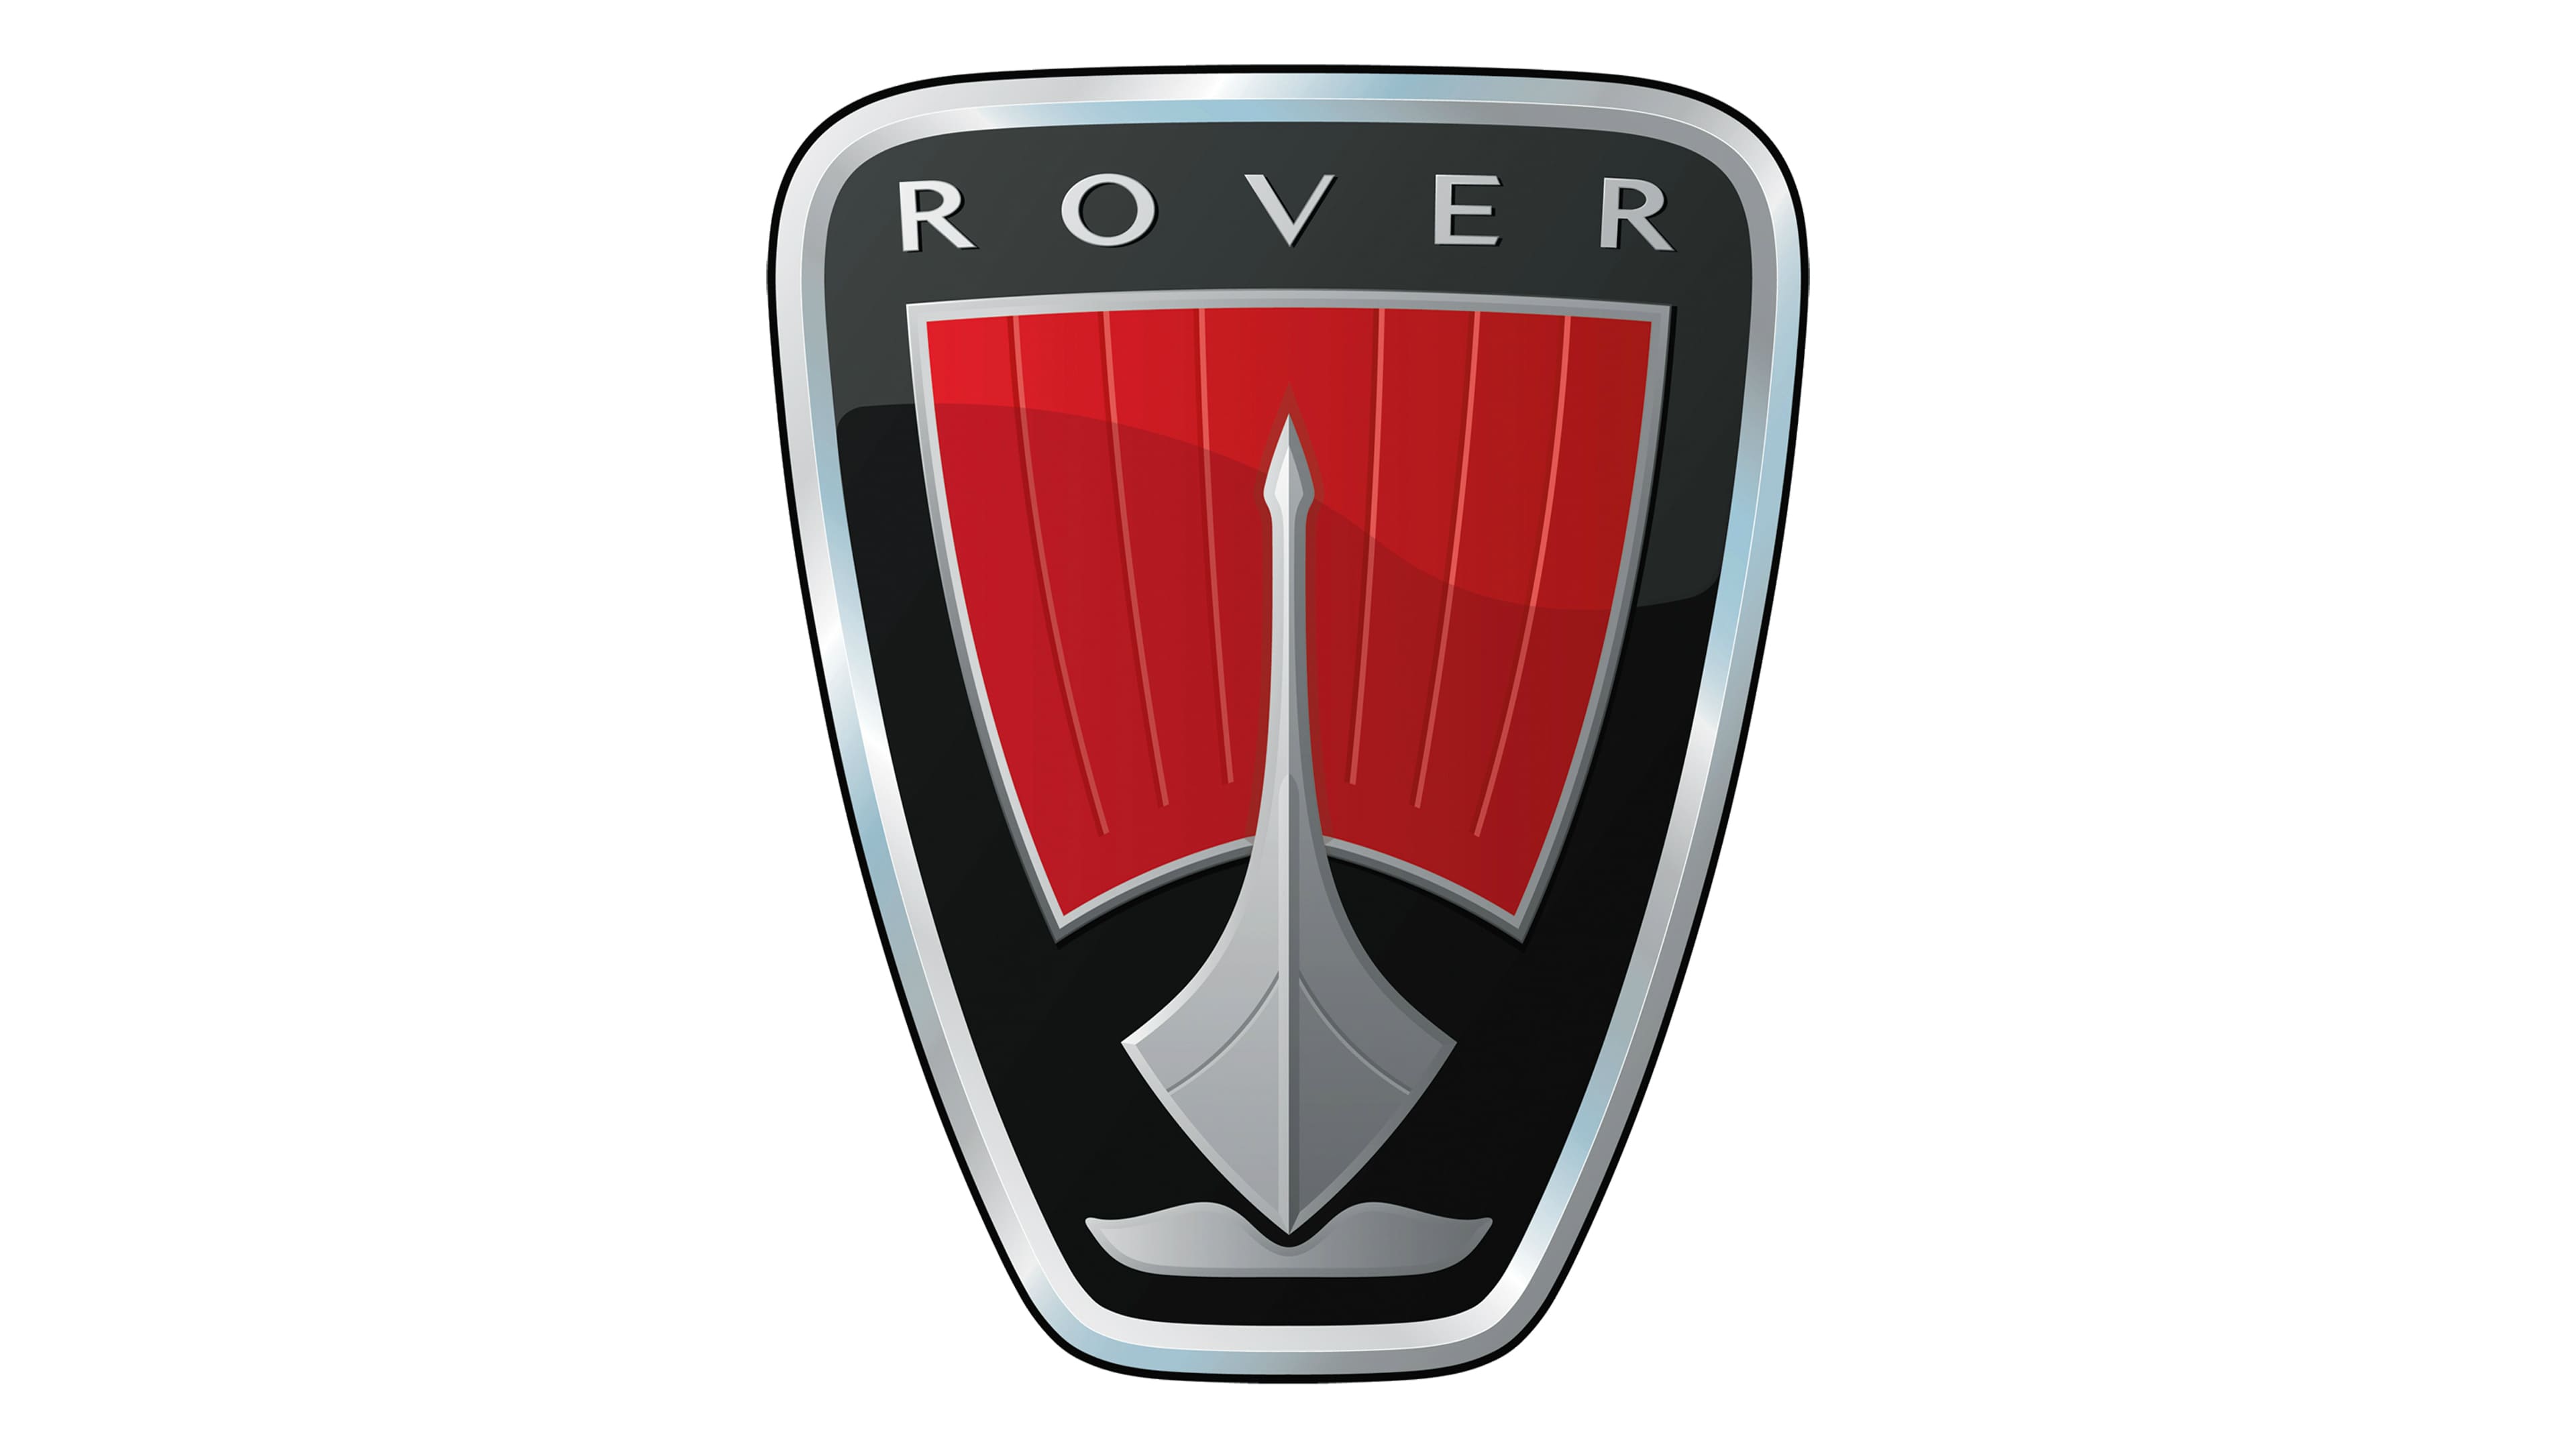 Rover Cars Original Factory Viking Ship Lapel Badge Stamped 